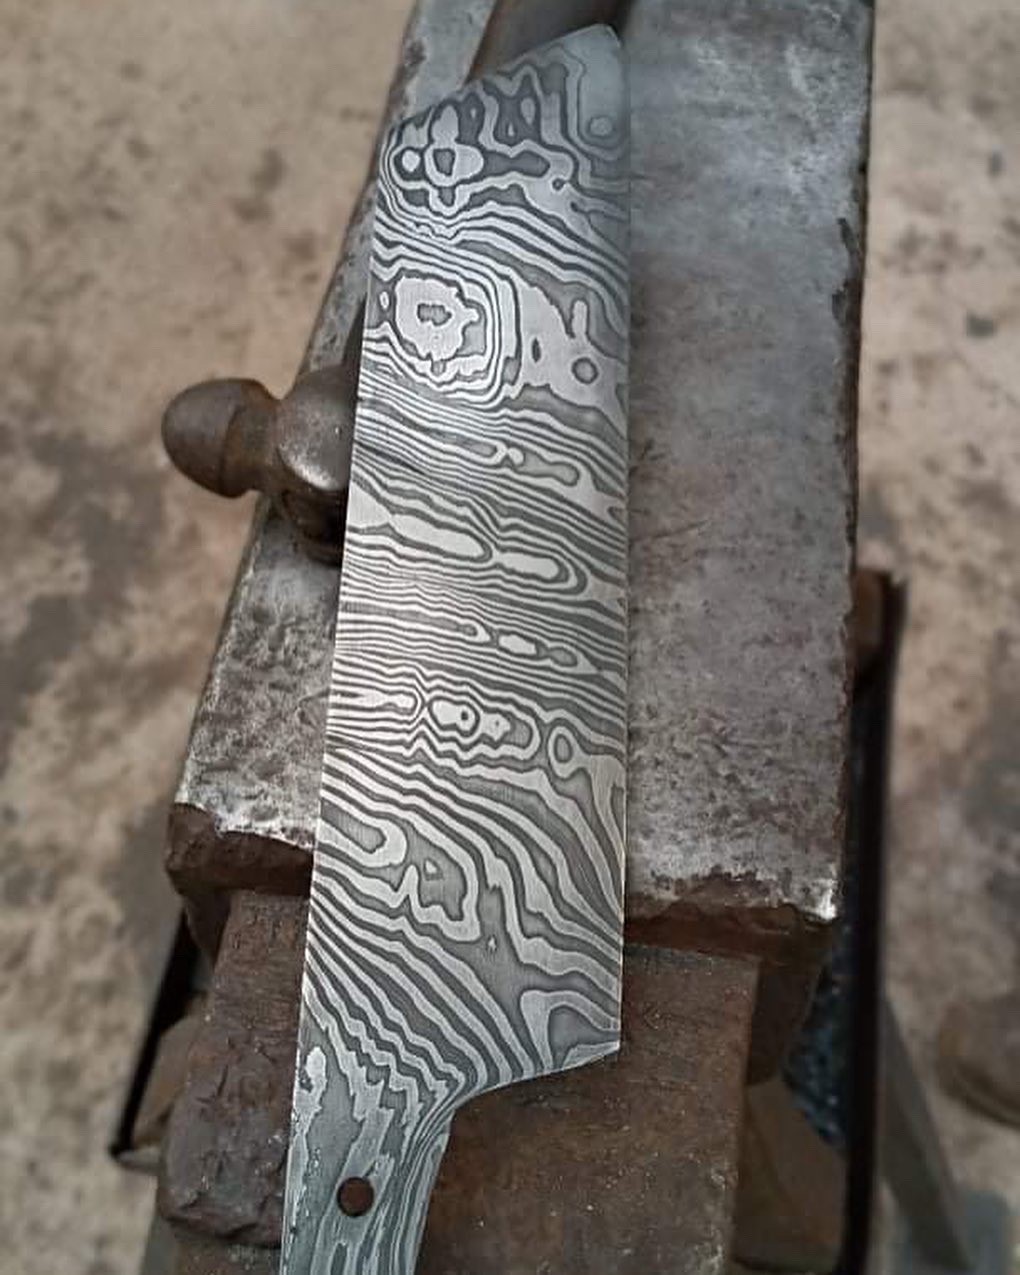 Damascus Knife Forging, Blacksmith Experience